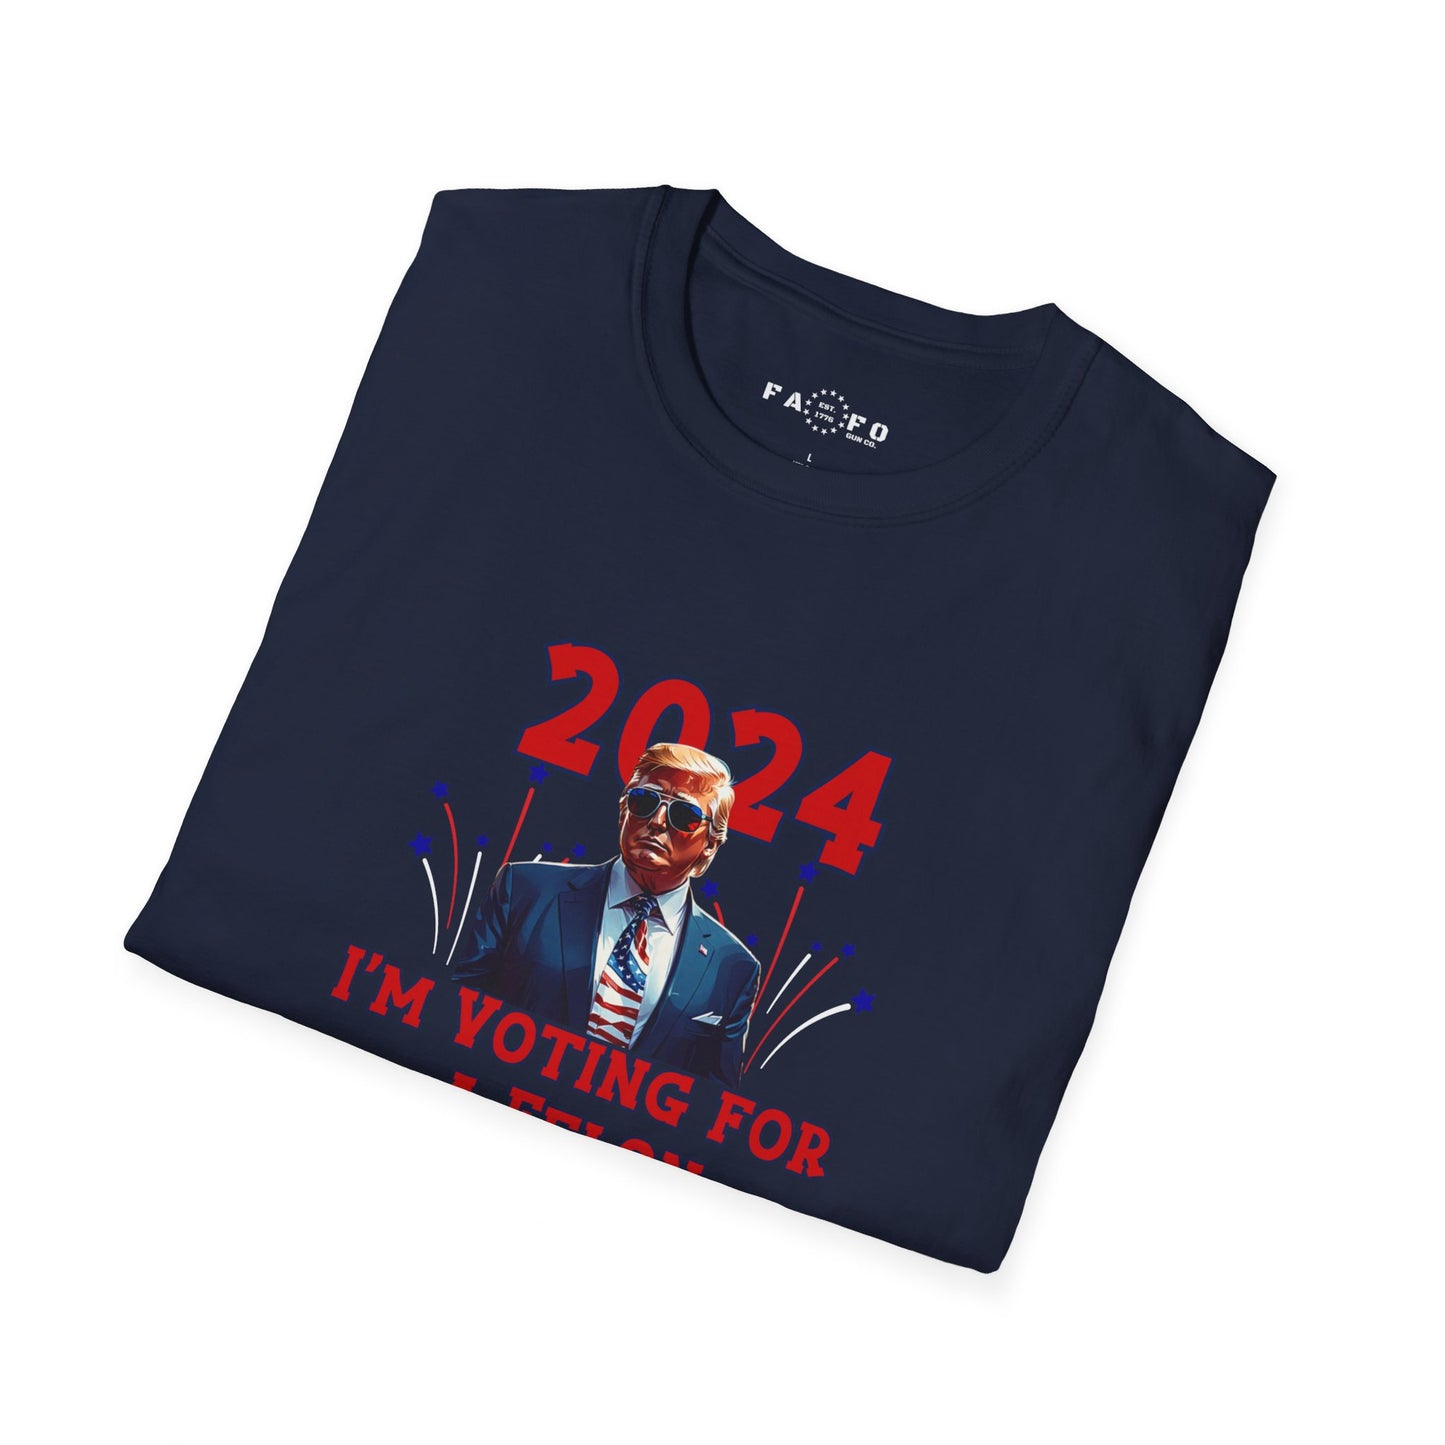 2024 Trump Felon T-Shirt